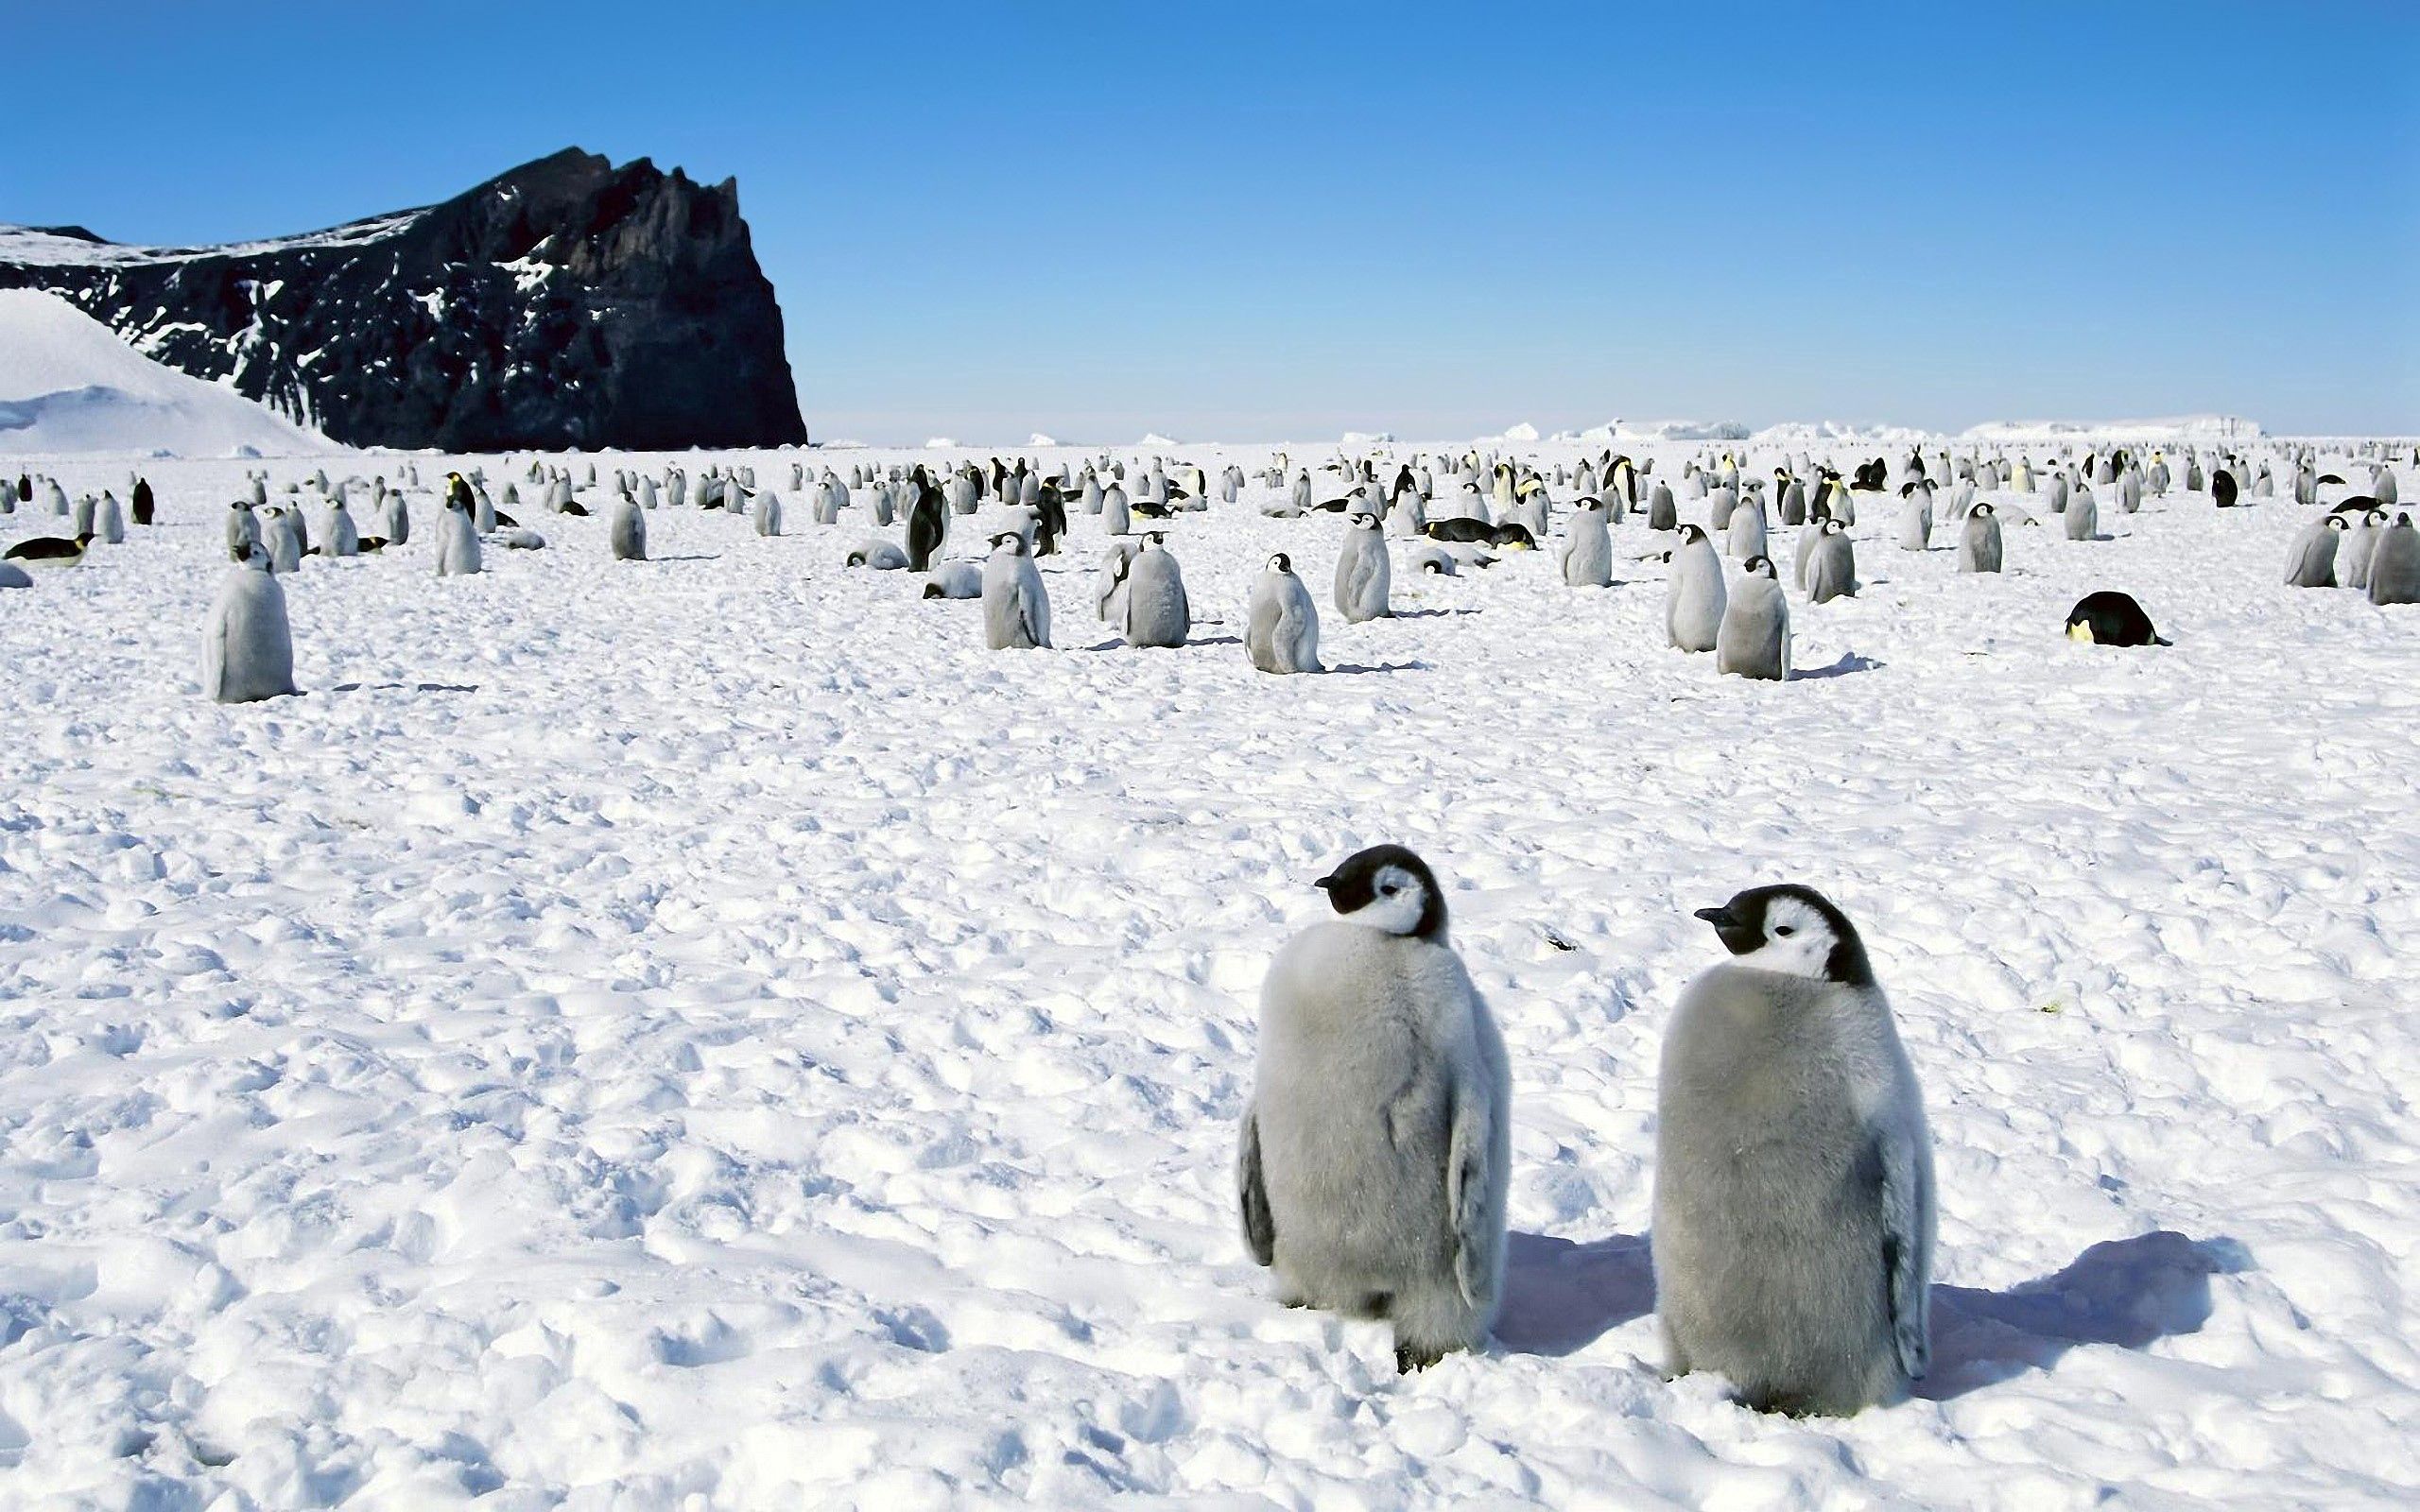 HQ Antarctica Background Images